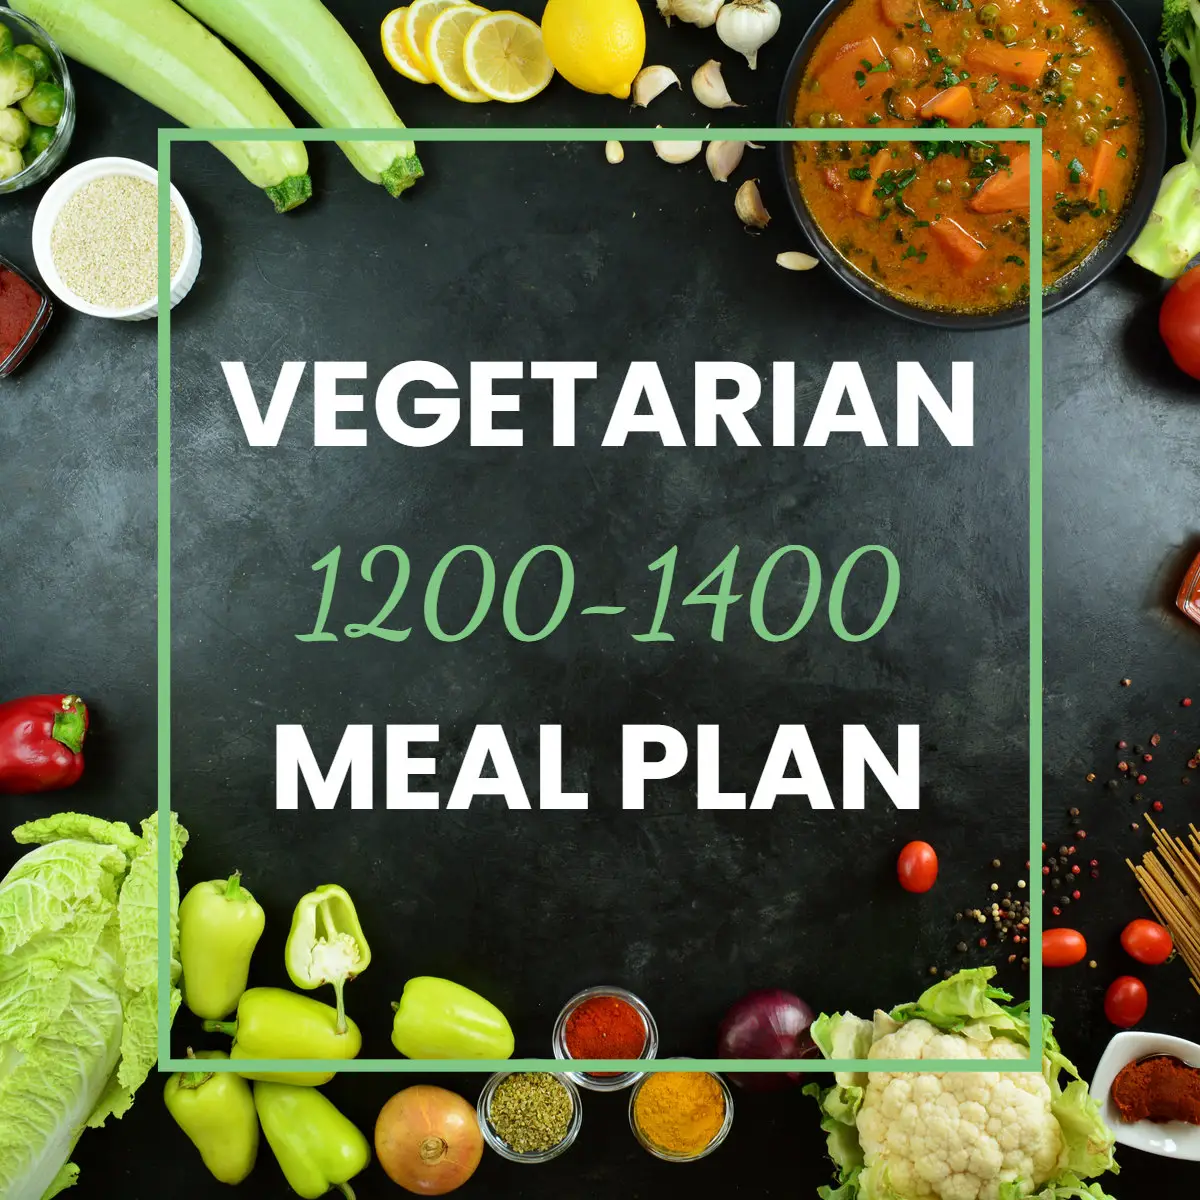 Benefits of a 1200 Calorie Vegetarian Meal Plan